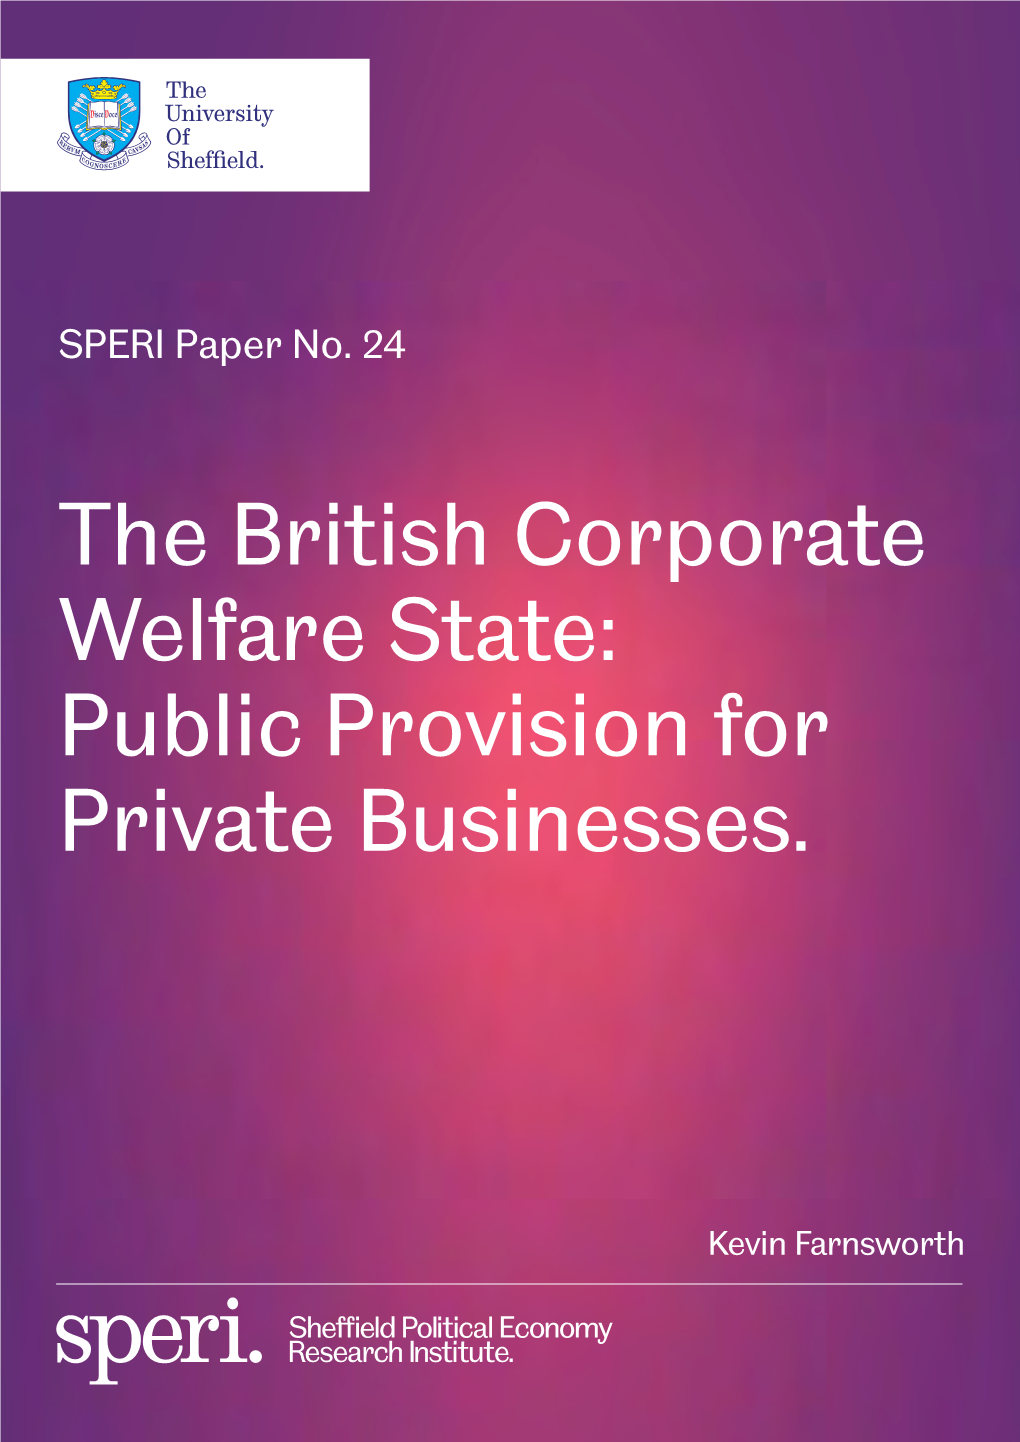 The British Corporate Welfare State: Public Provision for Private Businesses